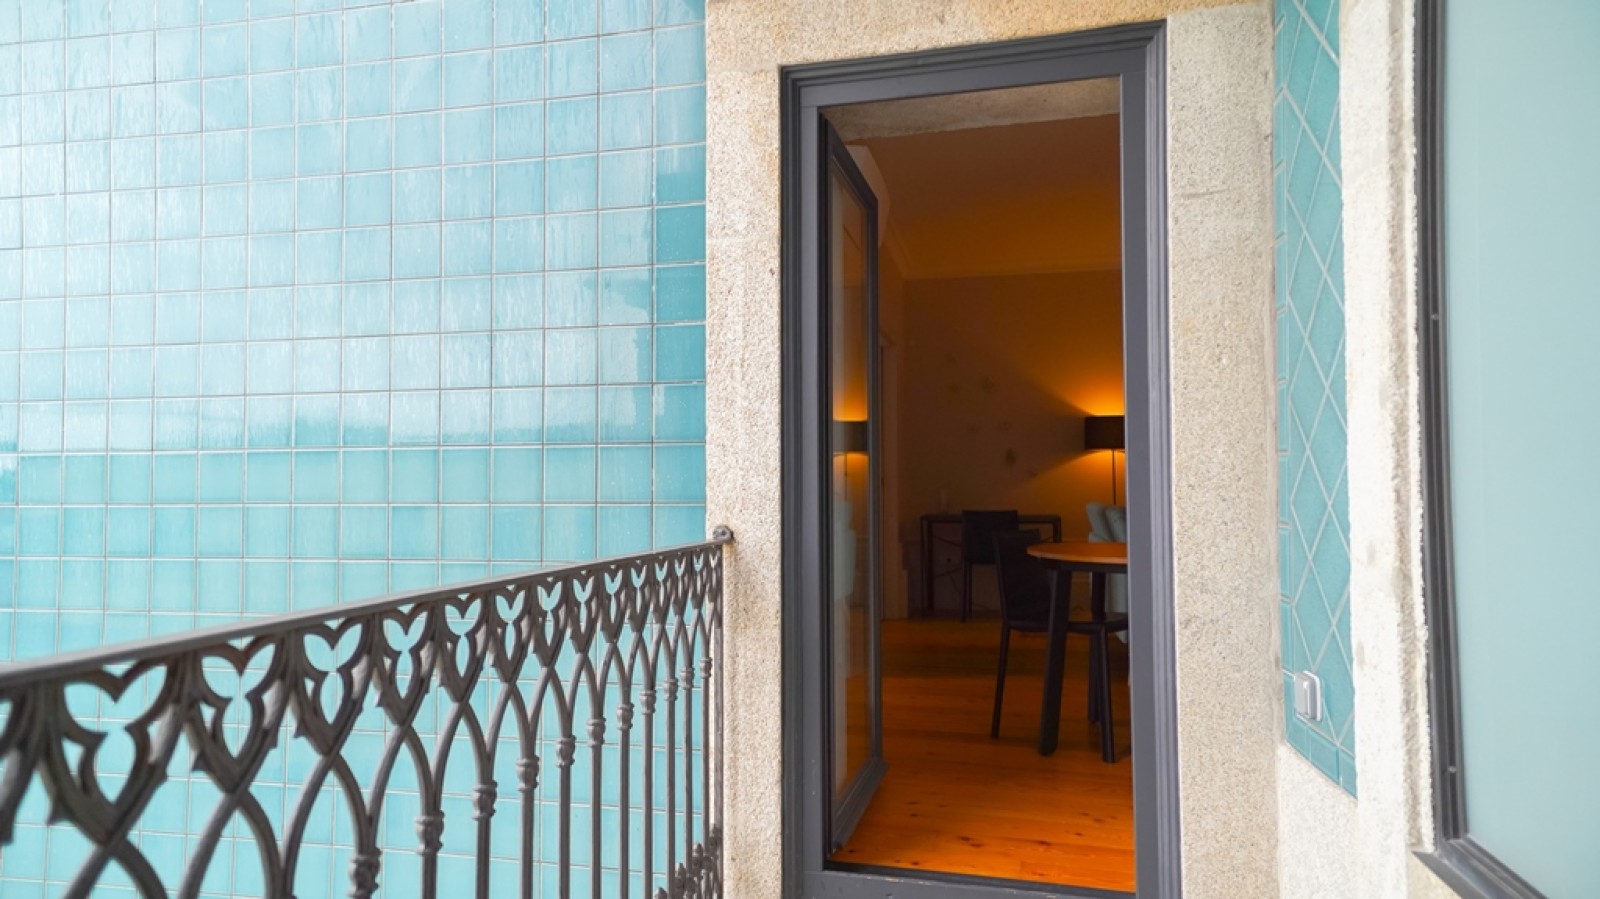 Appartement de 1 chambre avec balcon, à vendre, centre de Porto, Portugal_263796